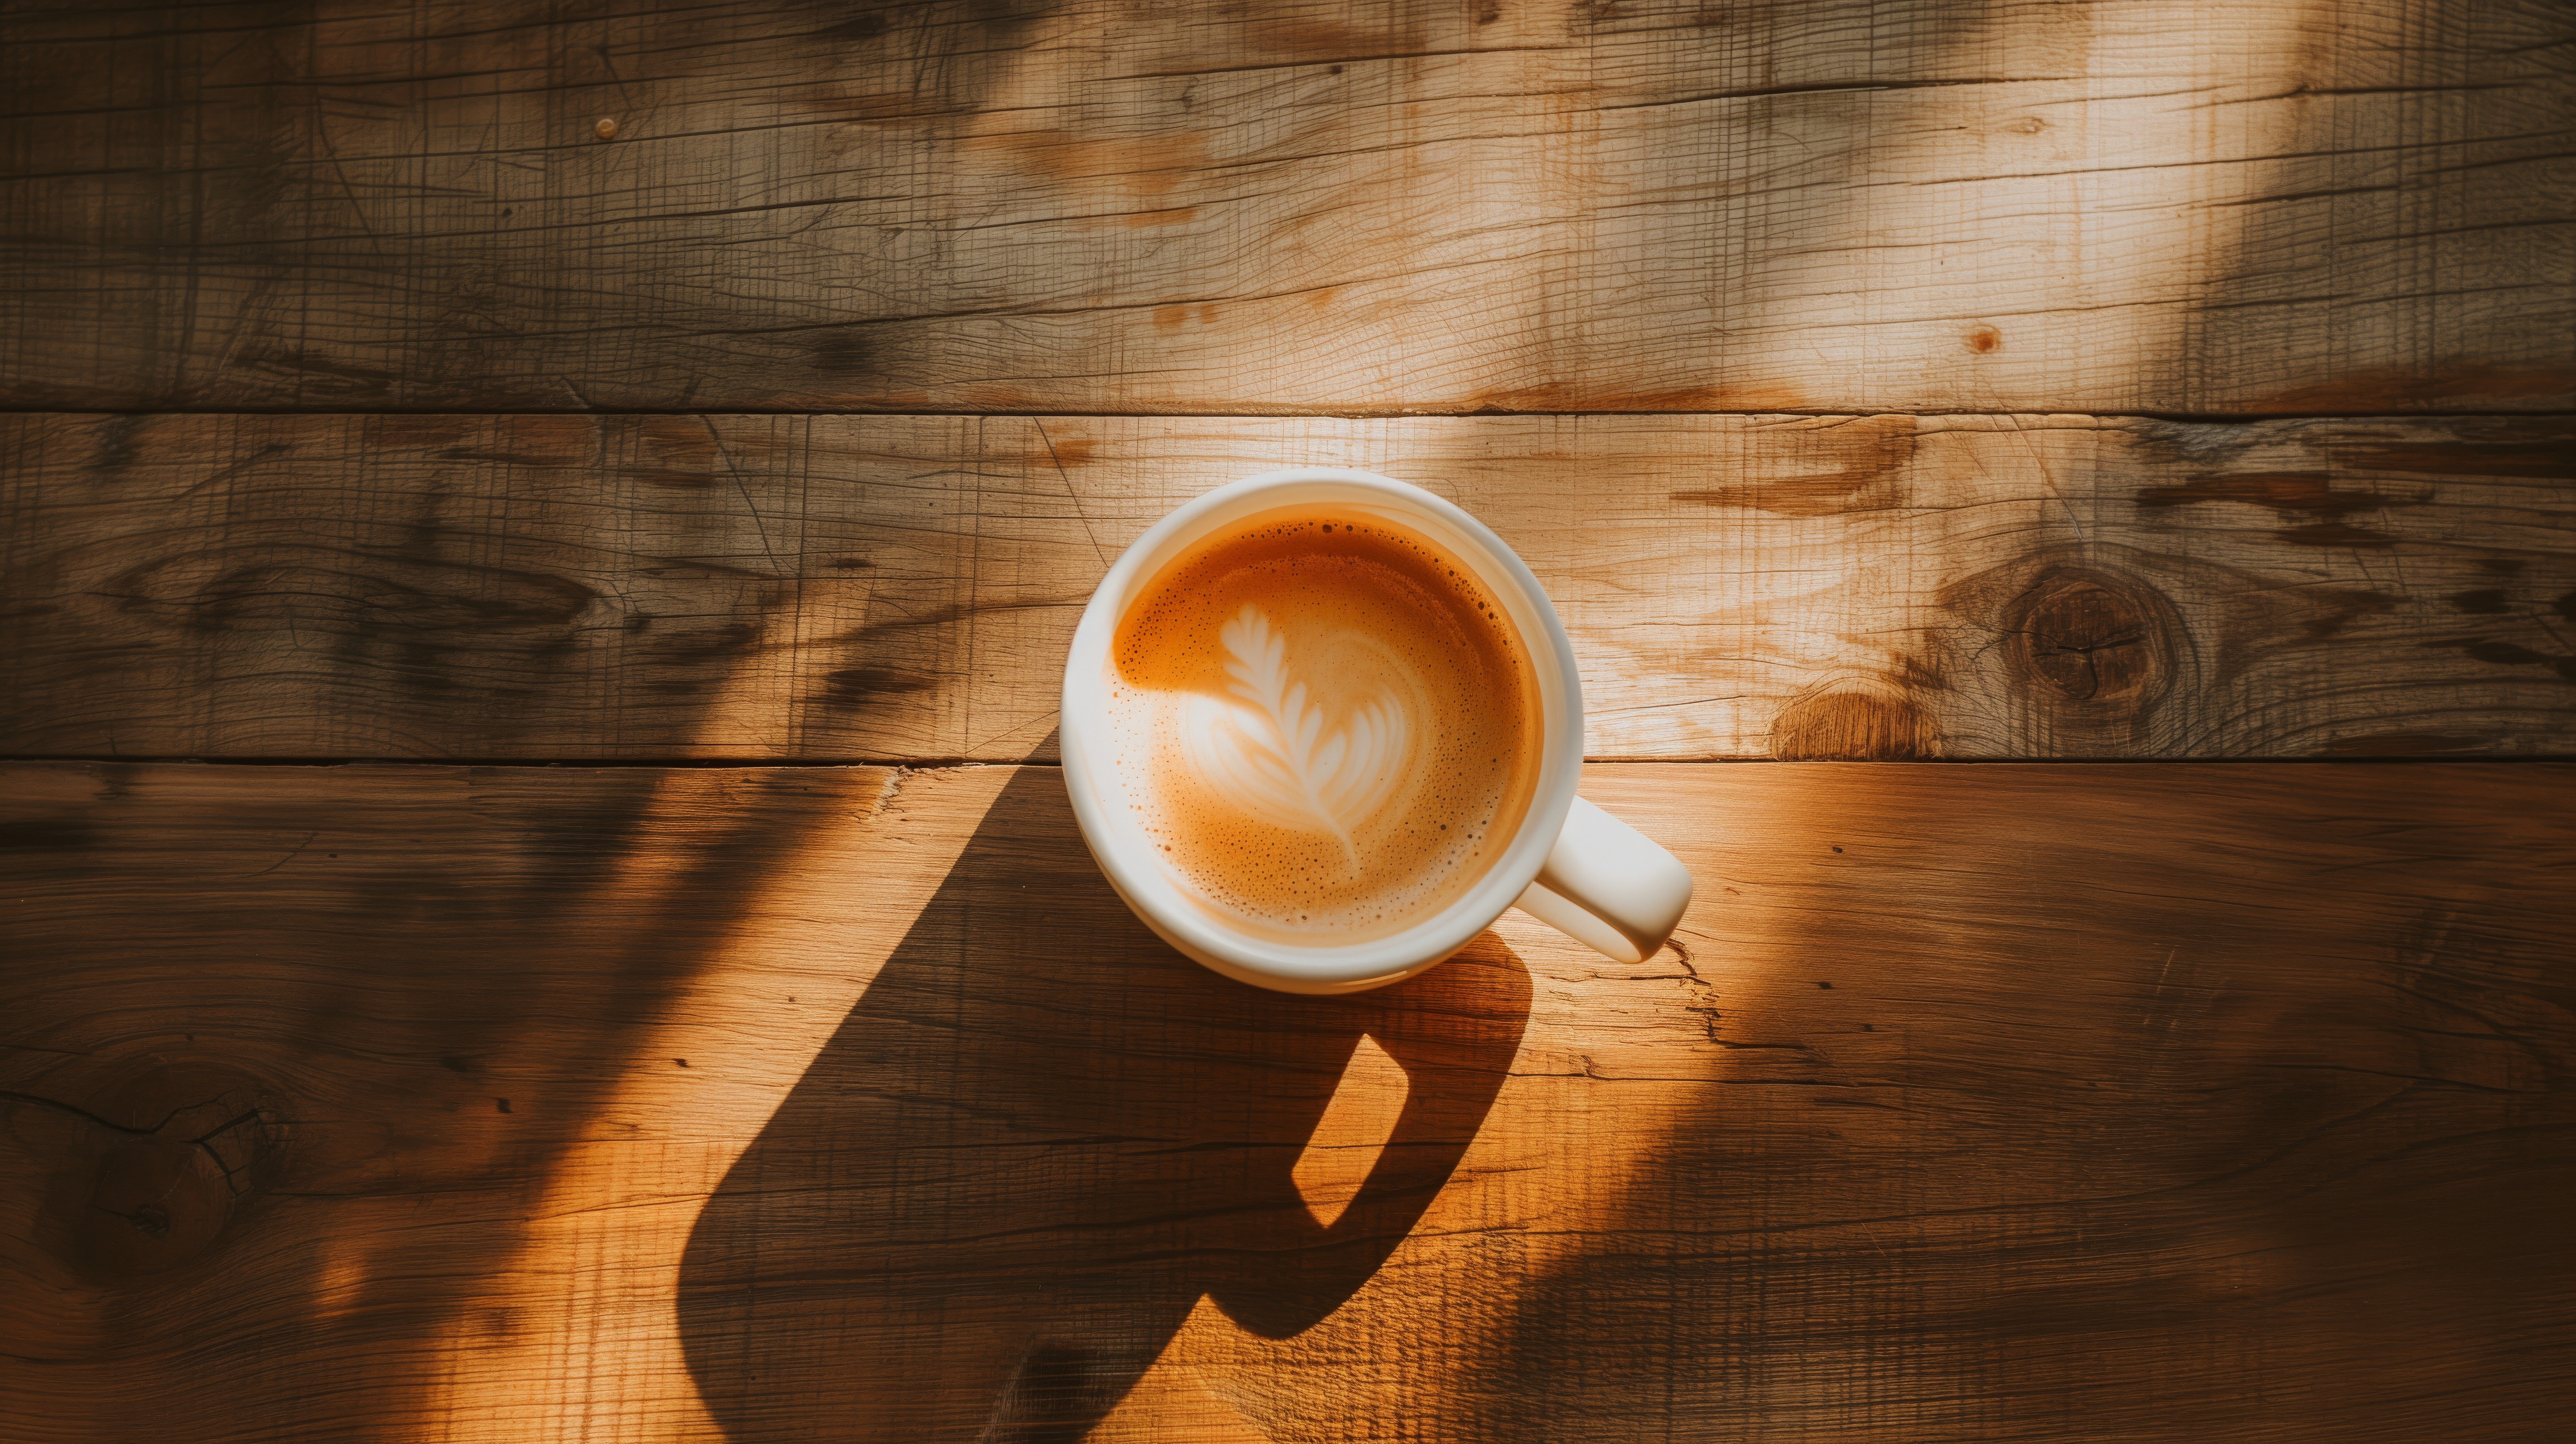 General 5824x3264 AI art wood mug coffee coffee cup latte wooden surface sunbeams sunlight cup drink shadow